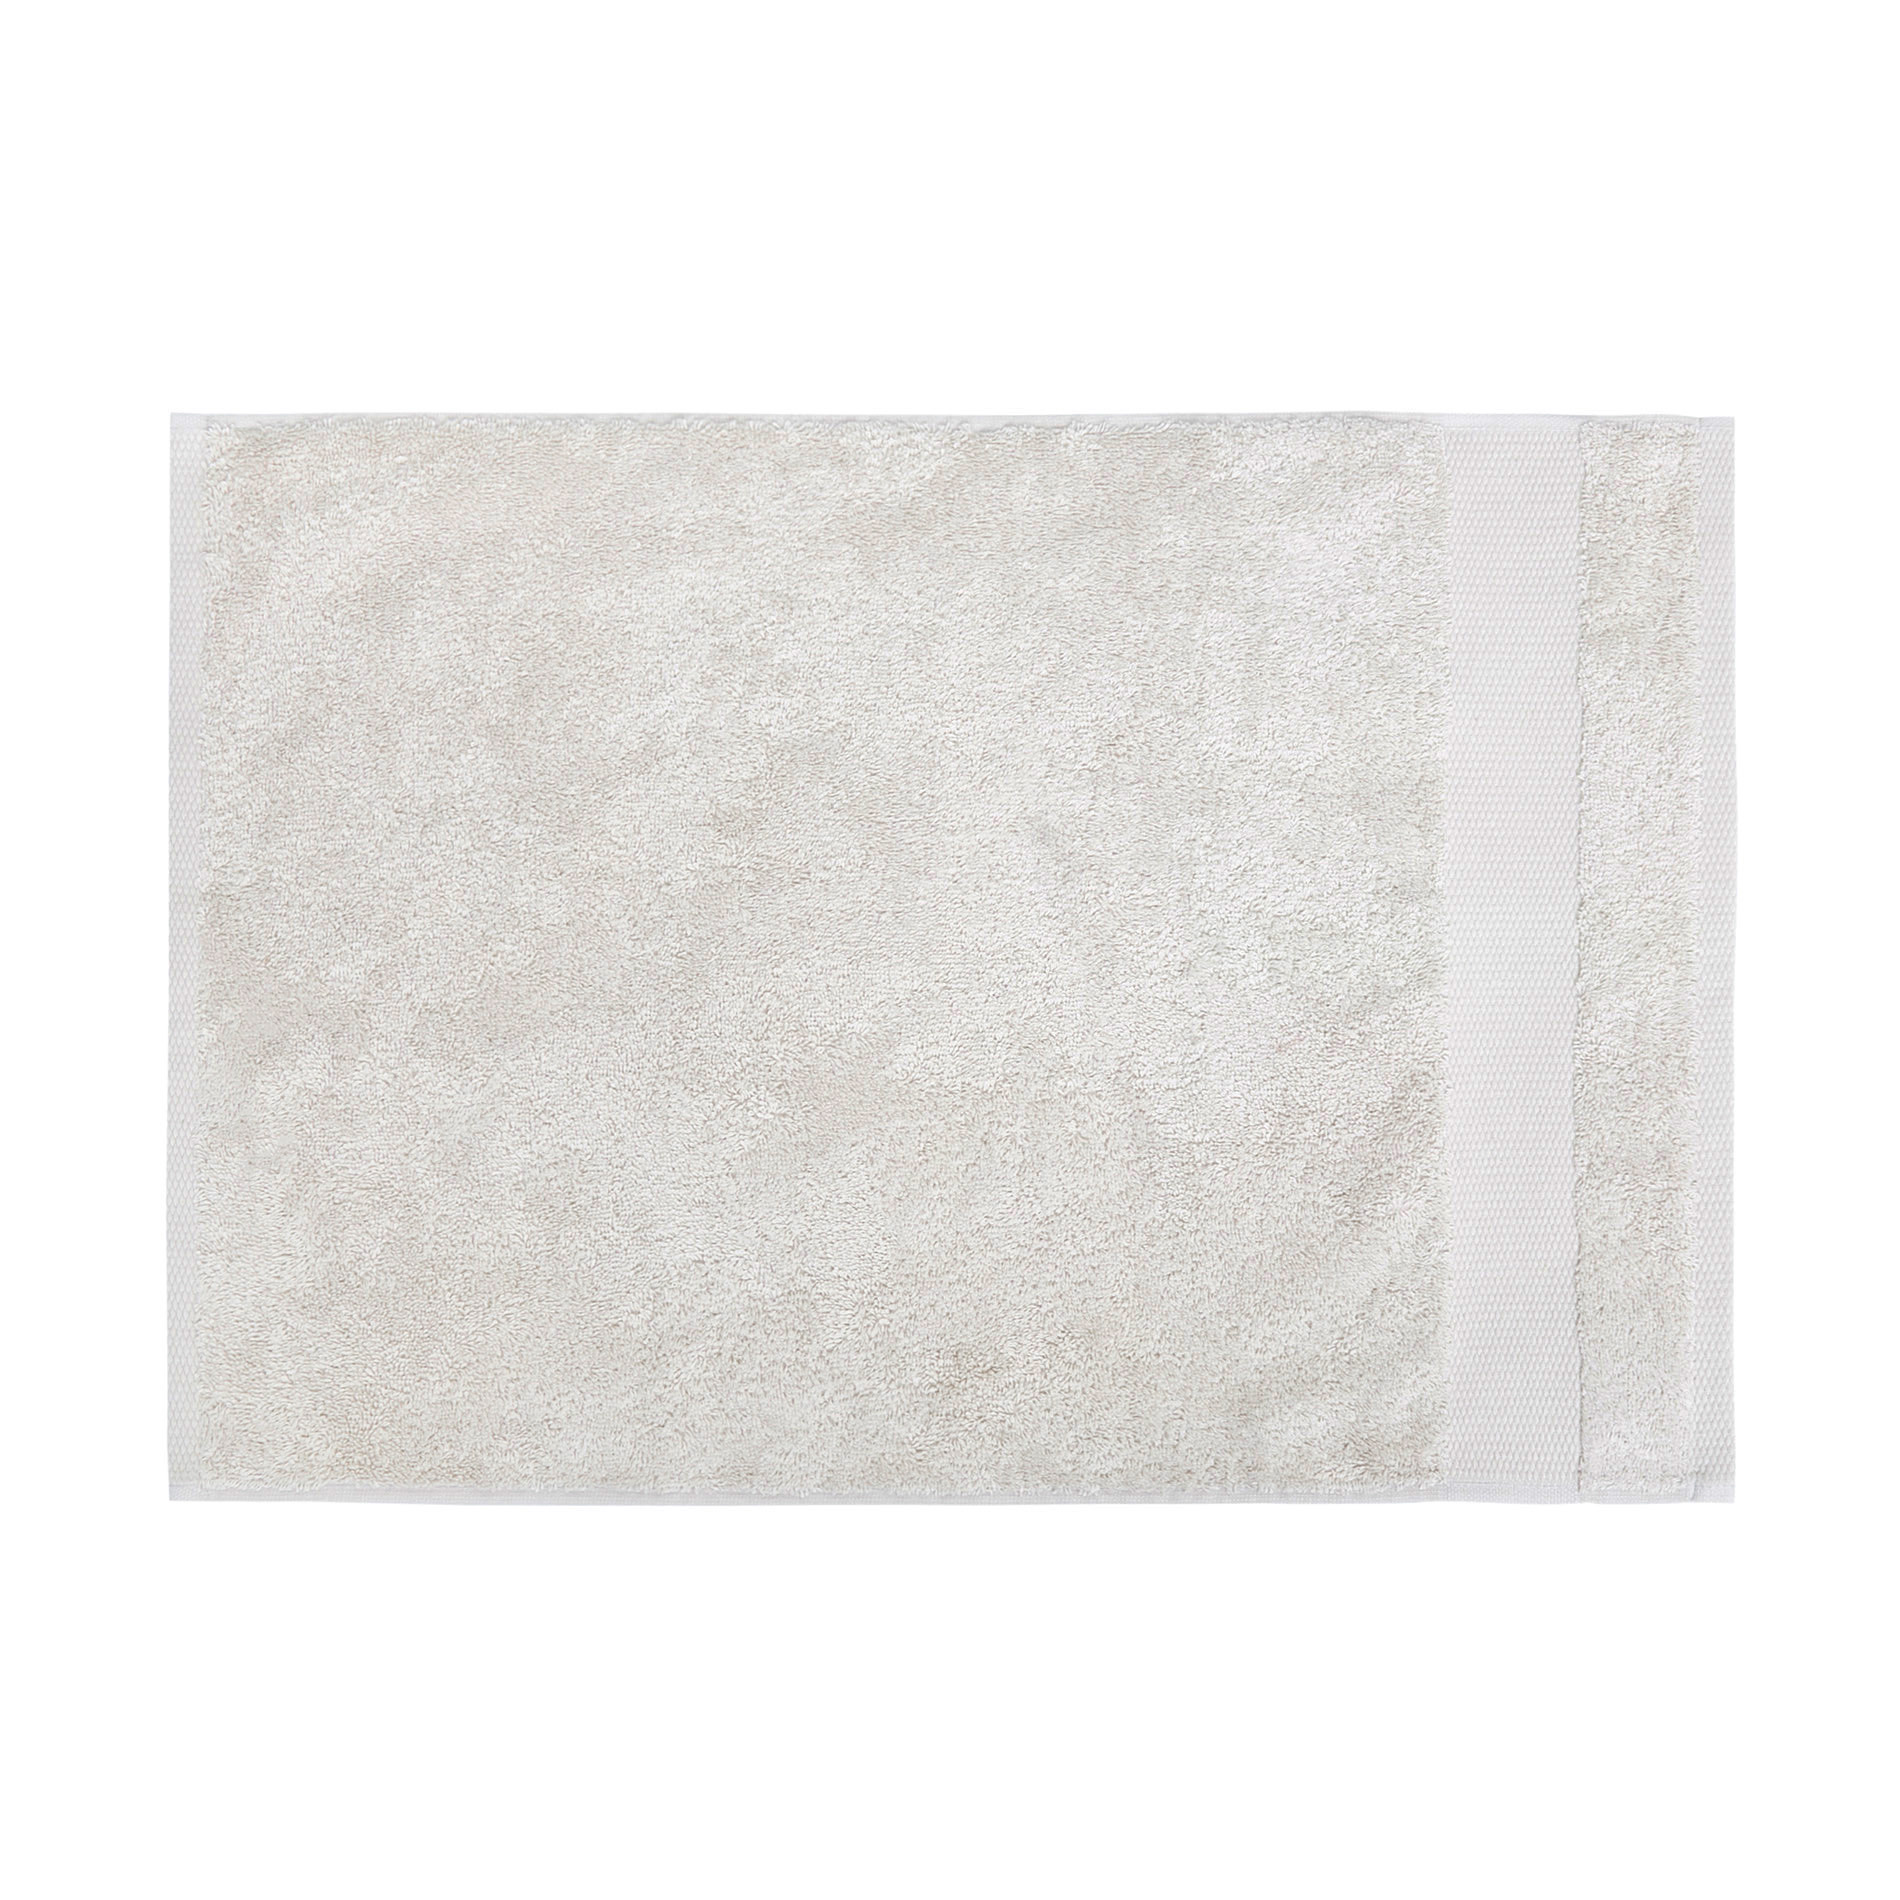 Zefiro pure cotton terry towel, Light Grey, large image number 2